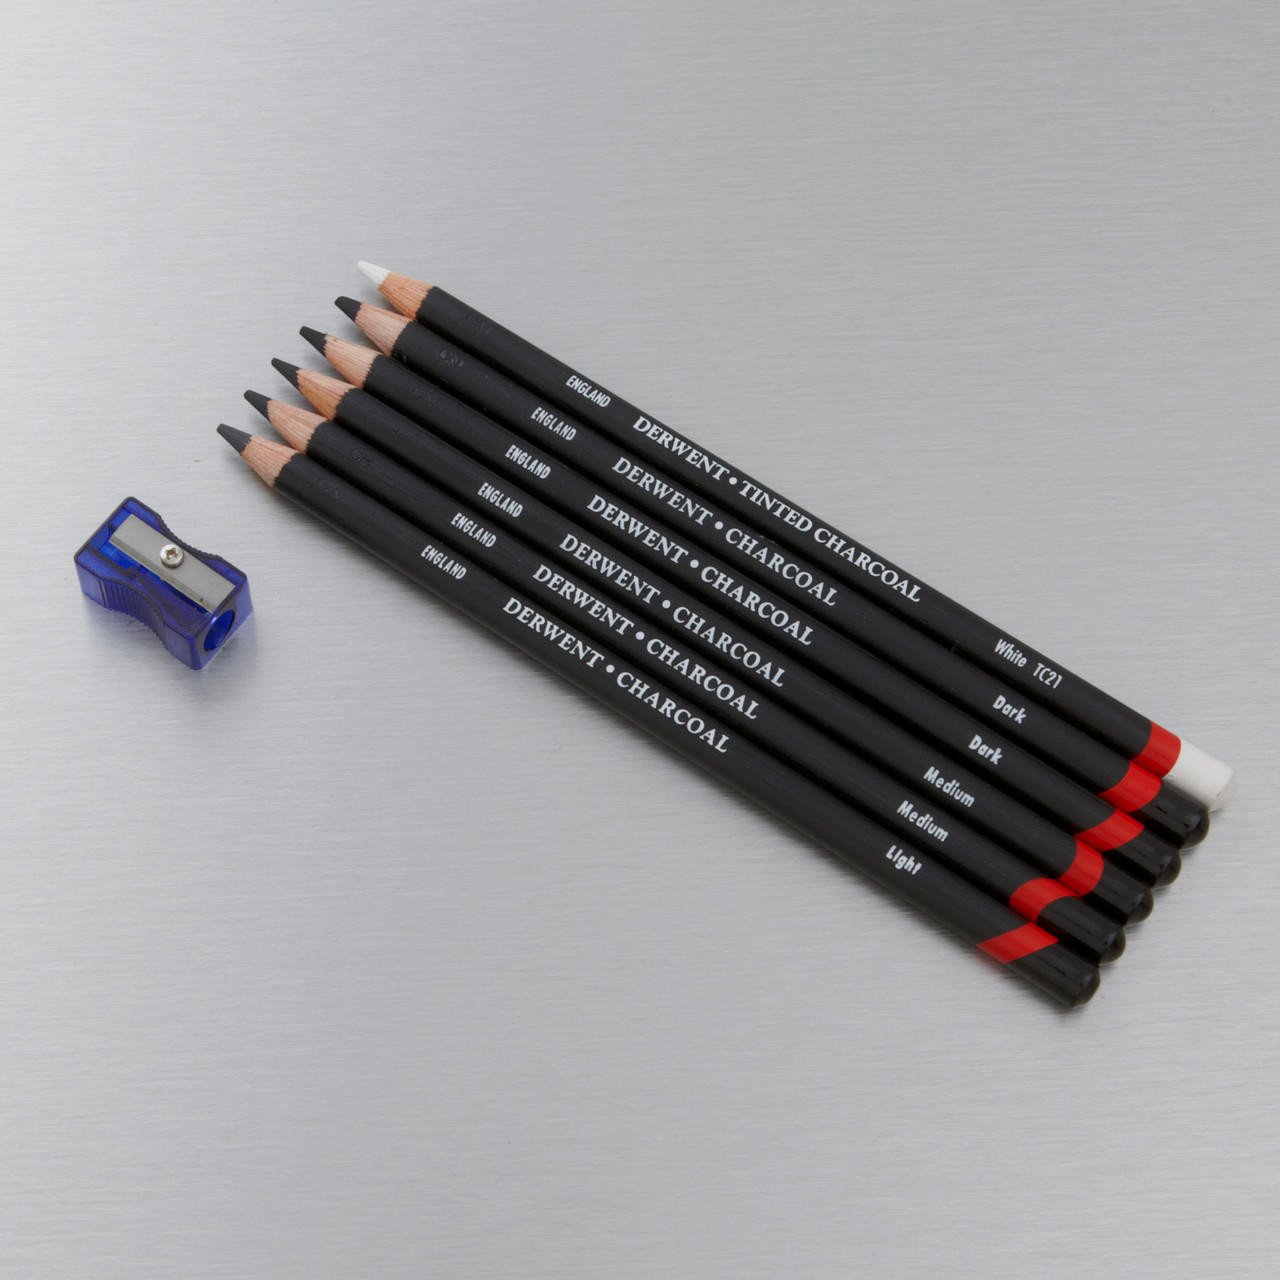 Charcoal Pencil Tin - Derwent set of 6 • PAPER SCISSORS STONE